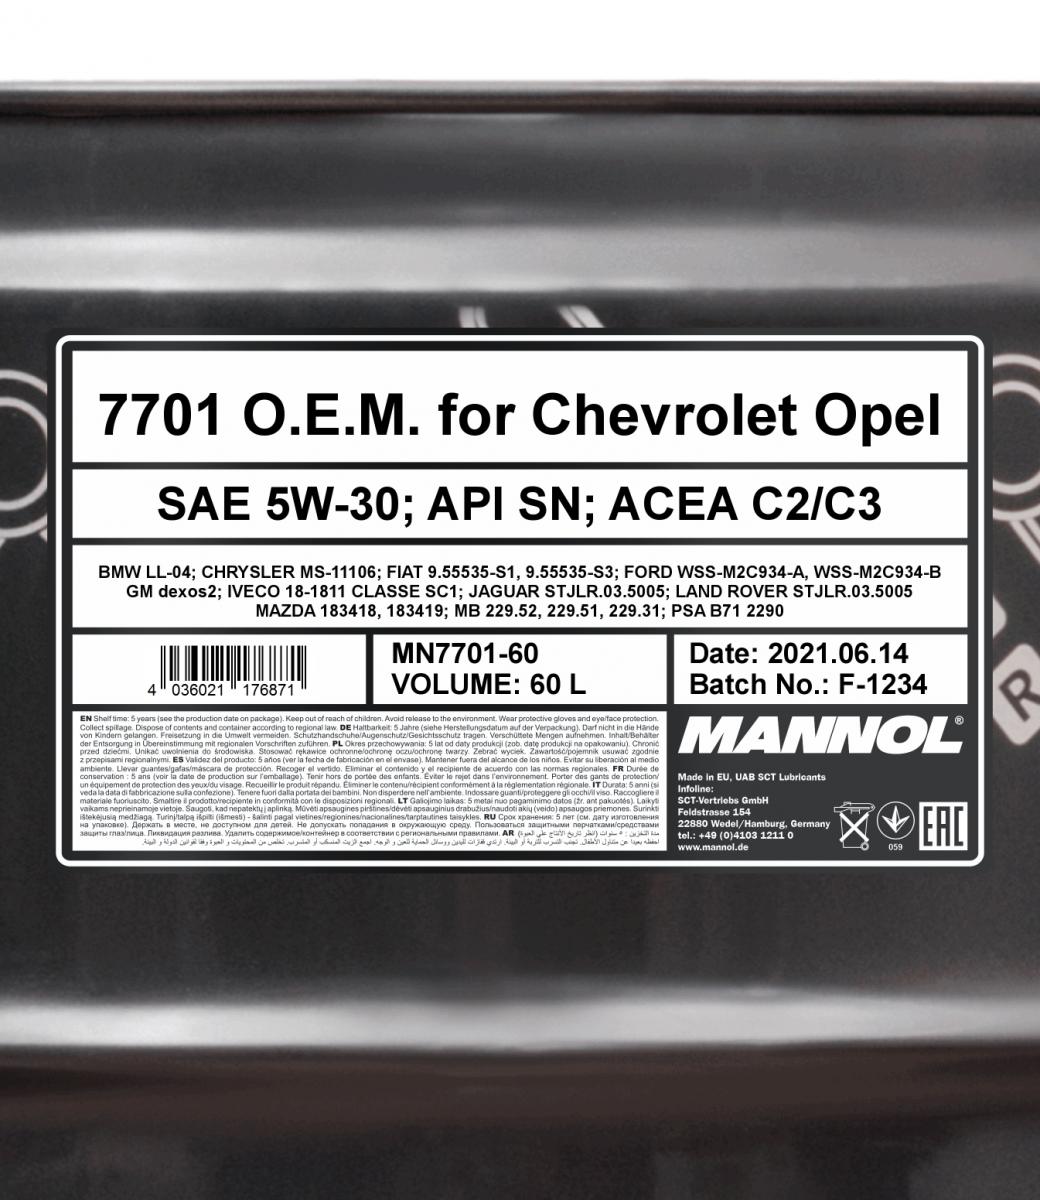 Oil mannol 7701 O.E.M. for Chevrolet Opel 5W30 4L - AliExpress